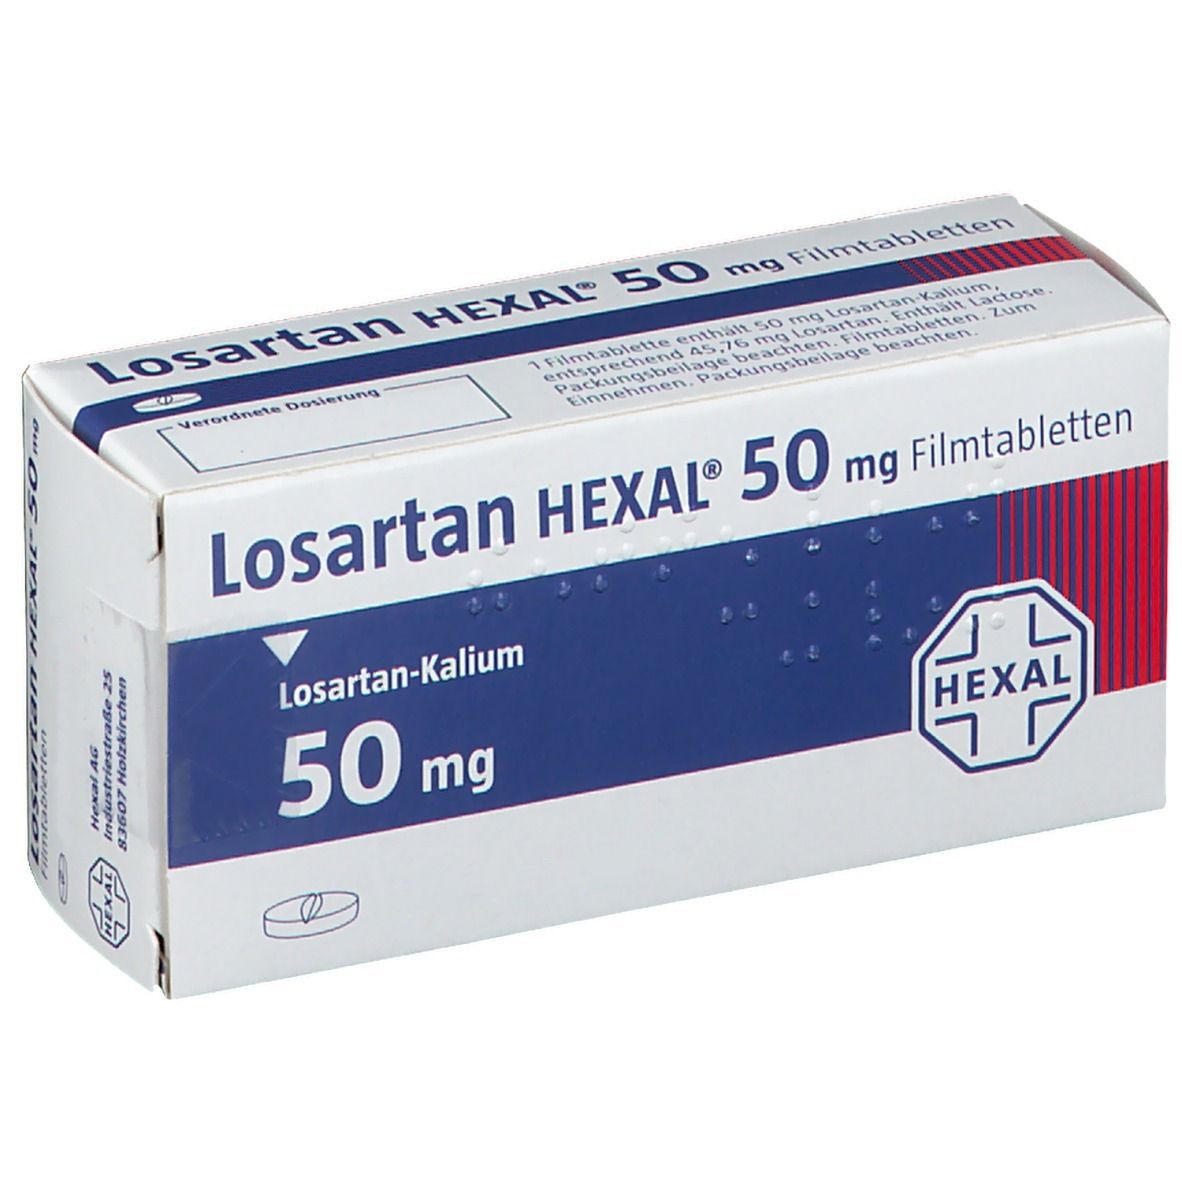 Losartan HEXAL® 50 mg